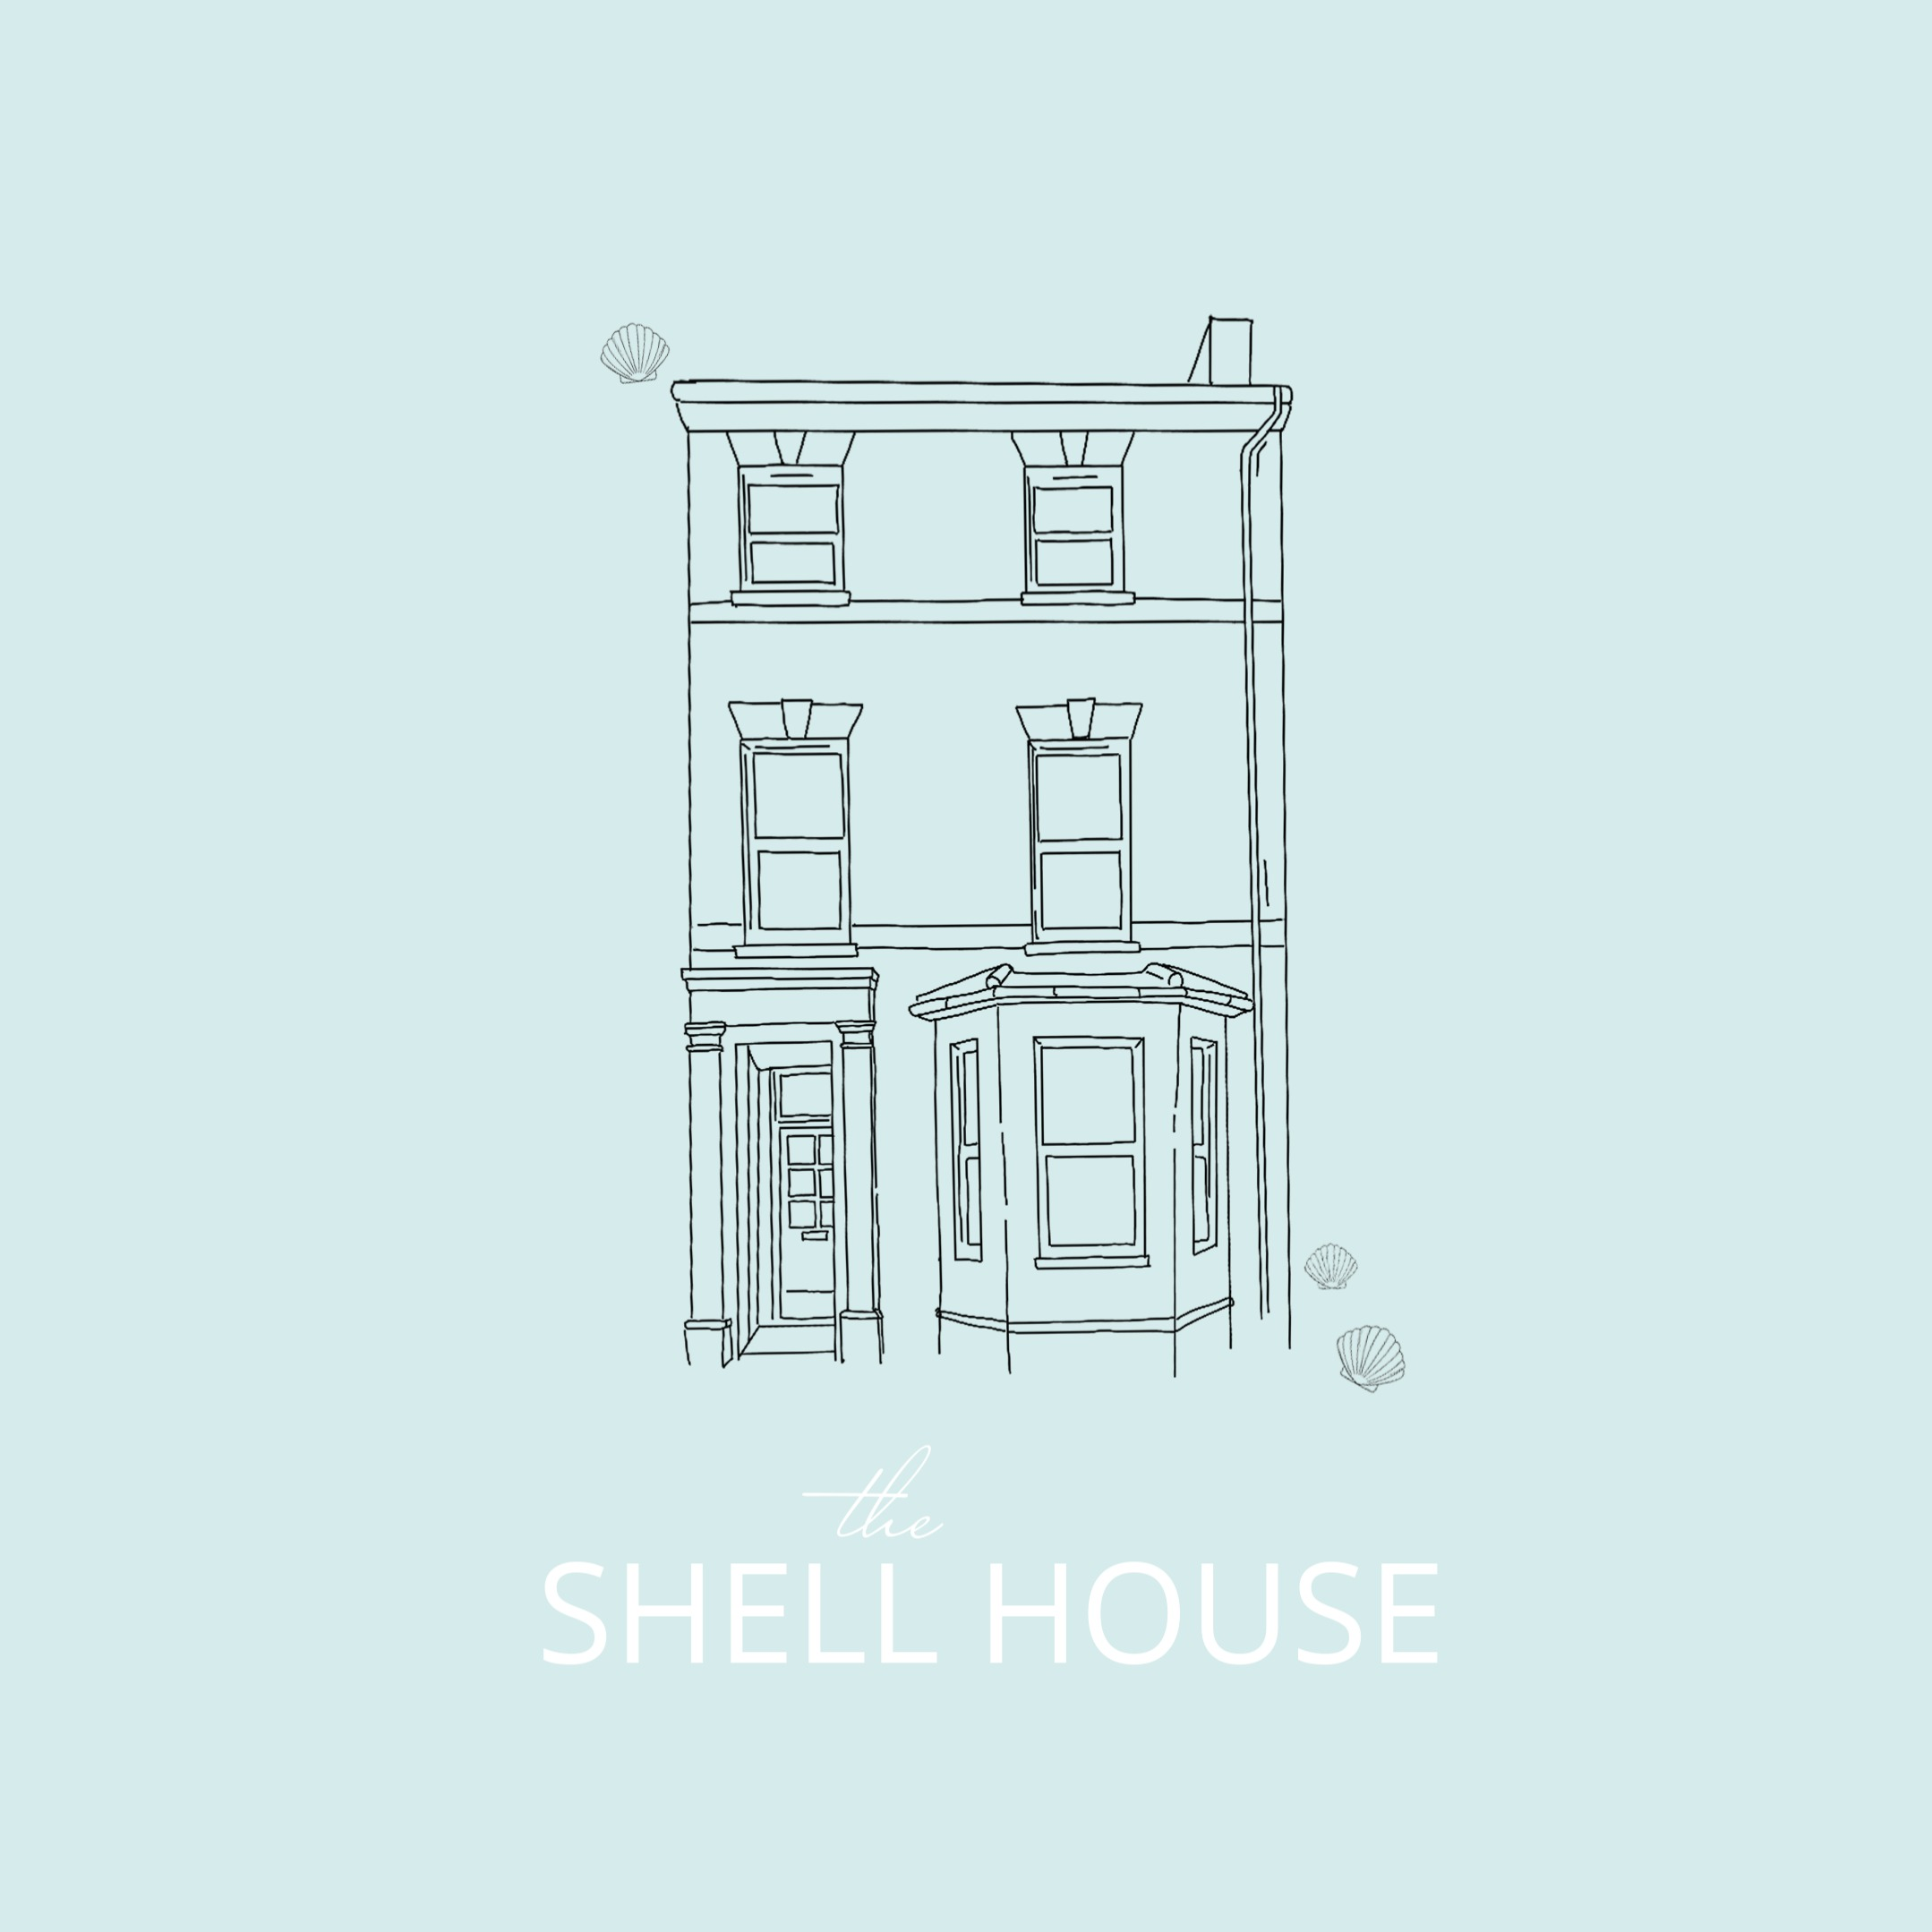 The Shell House Logo